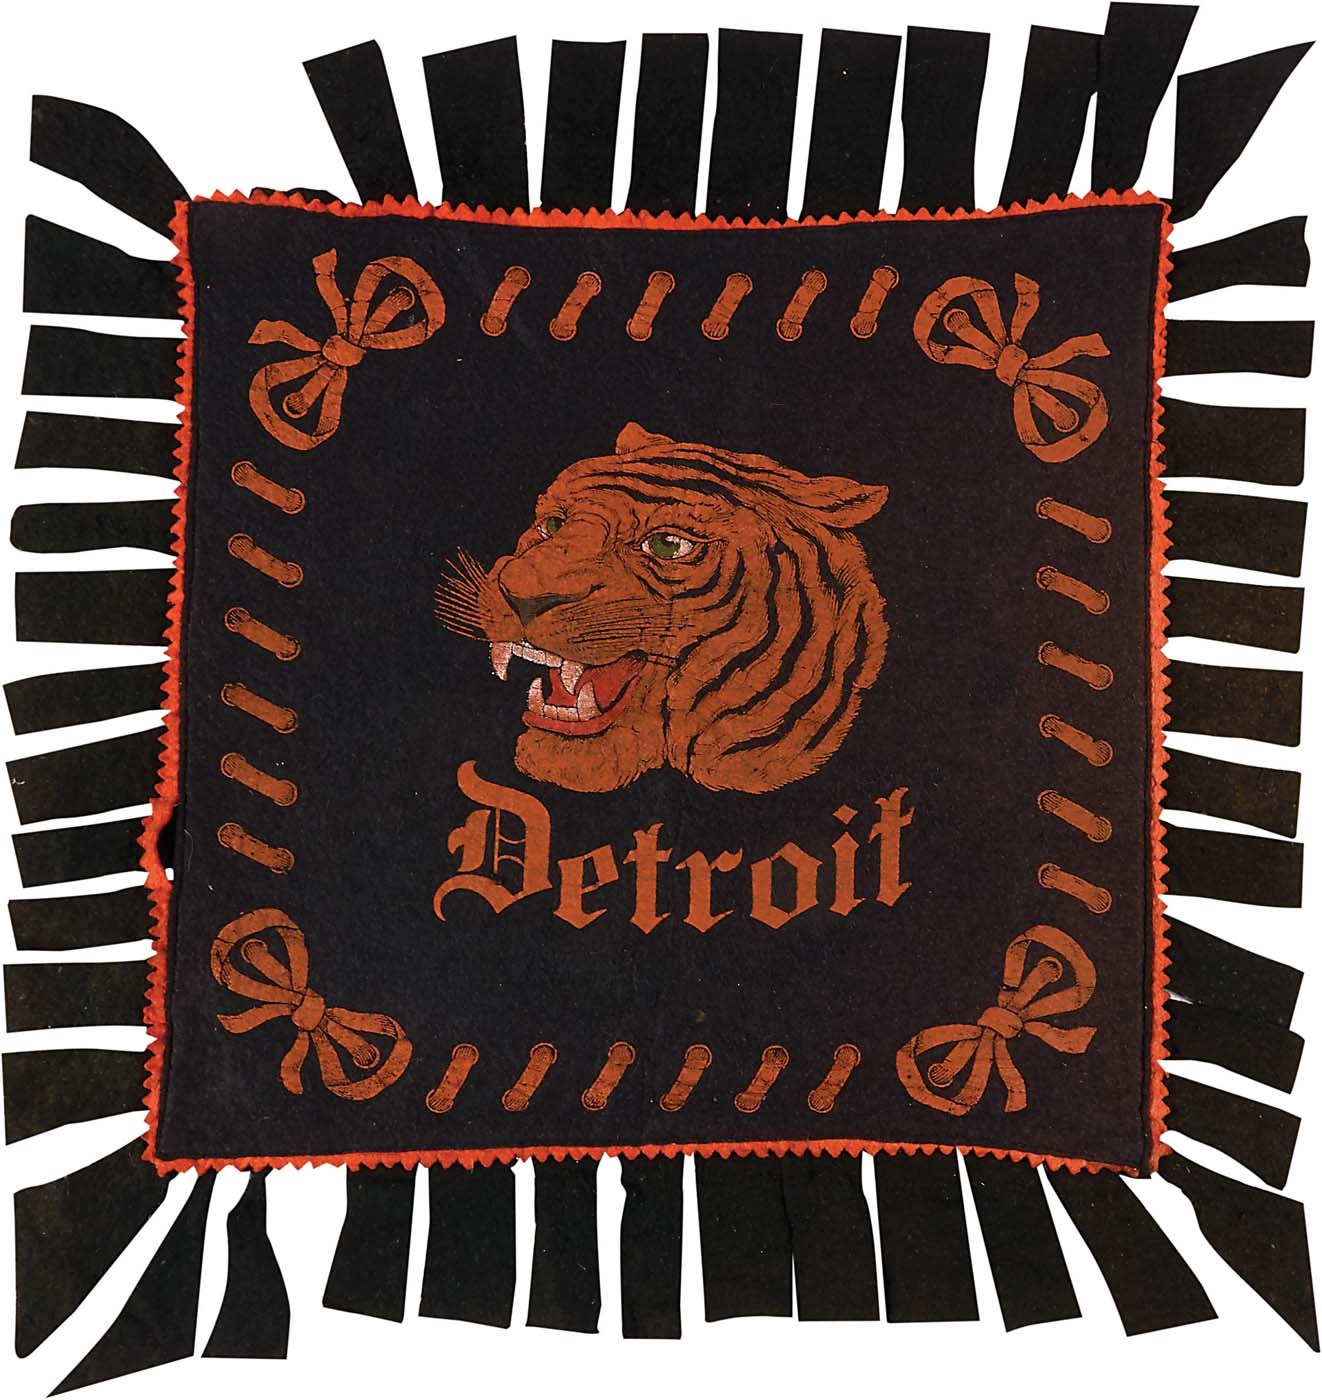 Ty Cobb and Detroit Tigers - Ty Cobb Era Detroit Tigers Felt Pillow Case